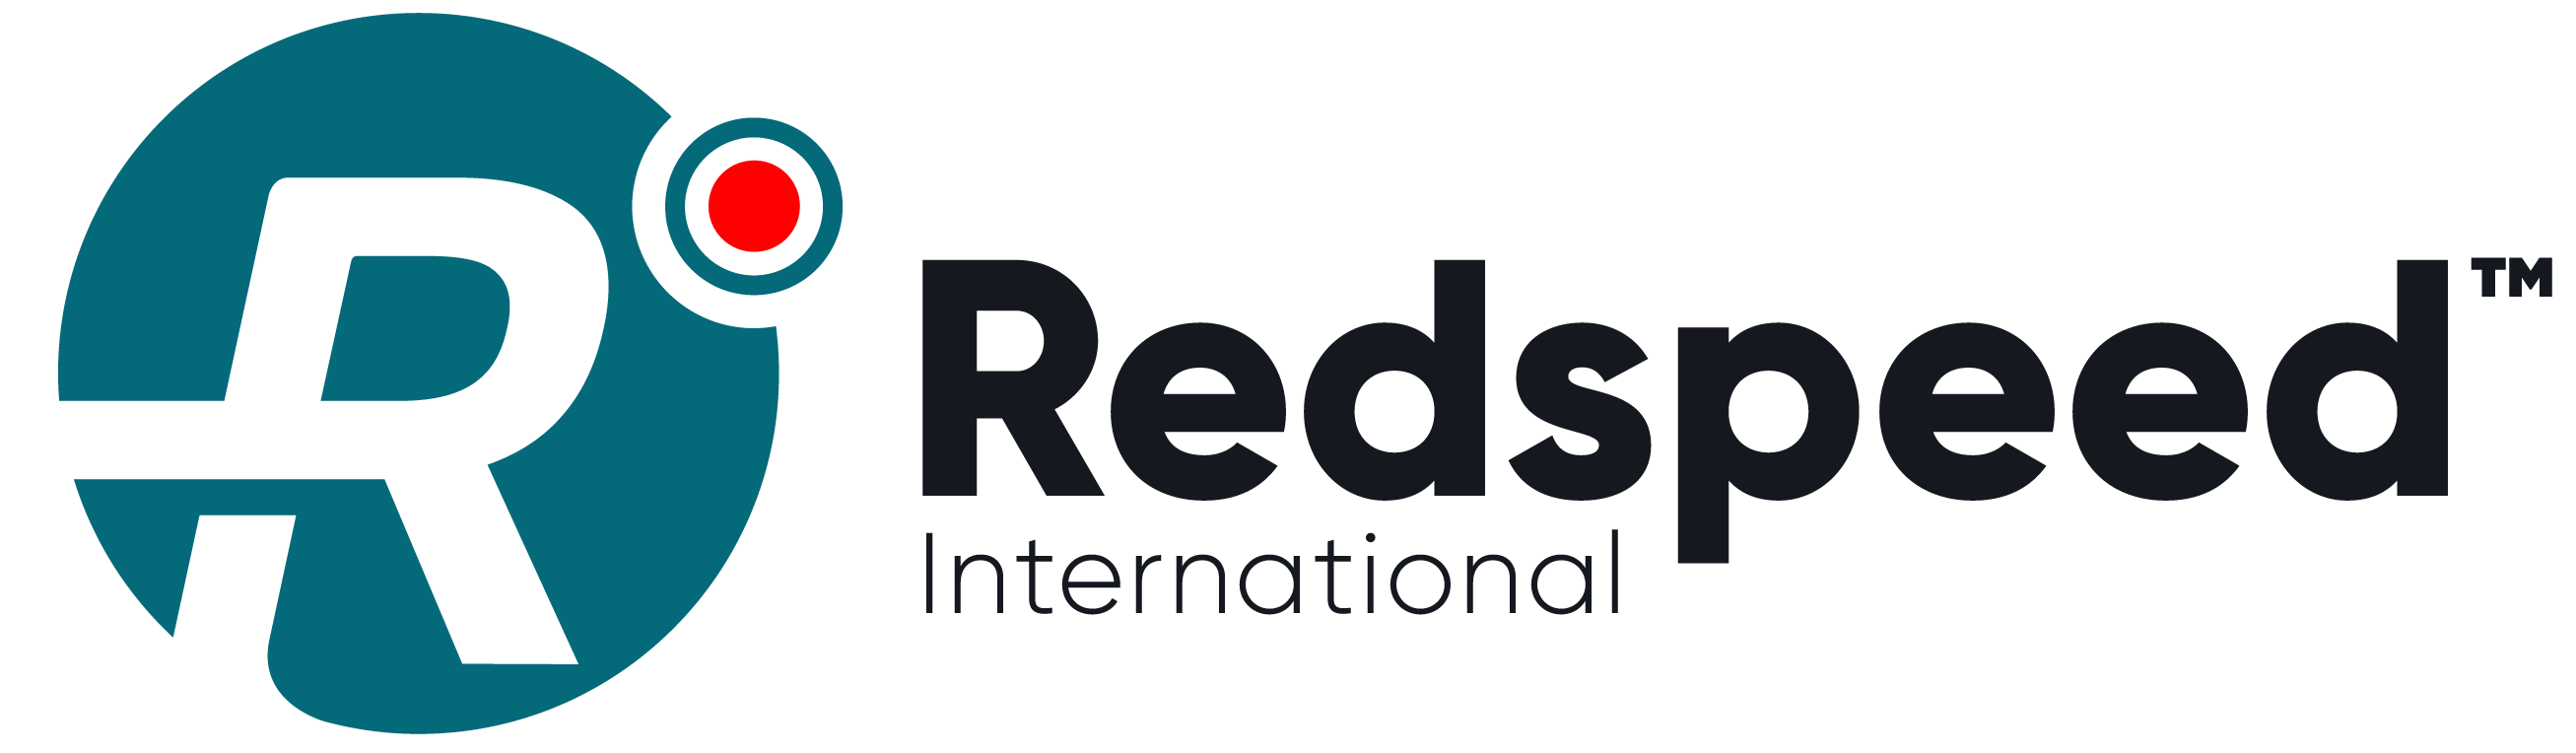 Redspeed International